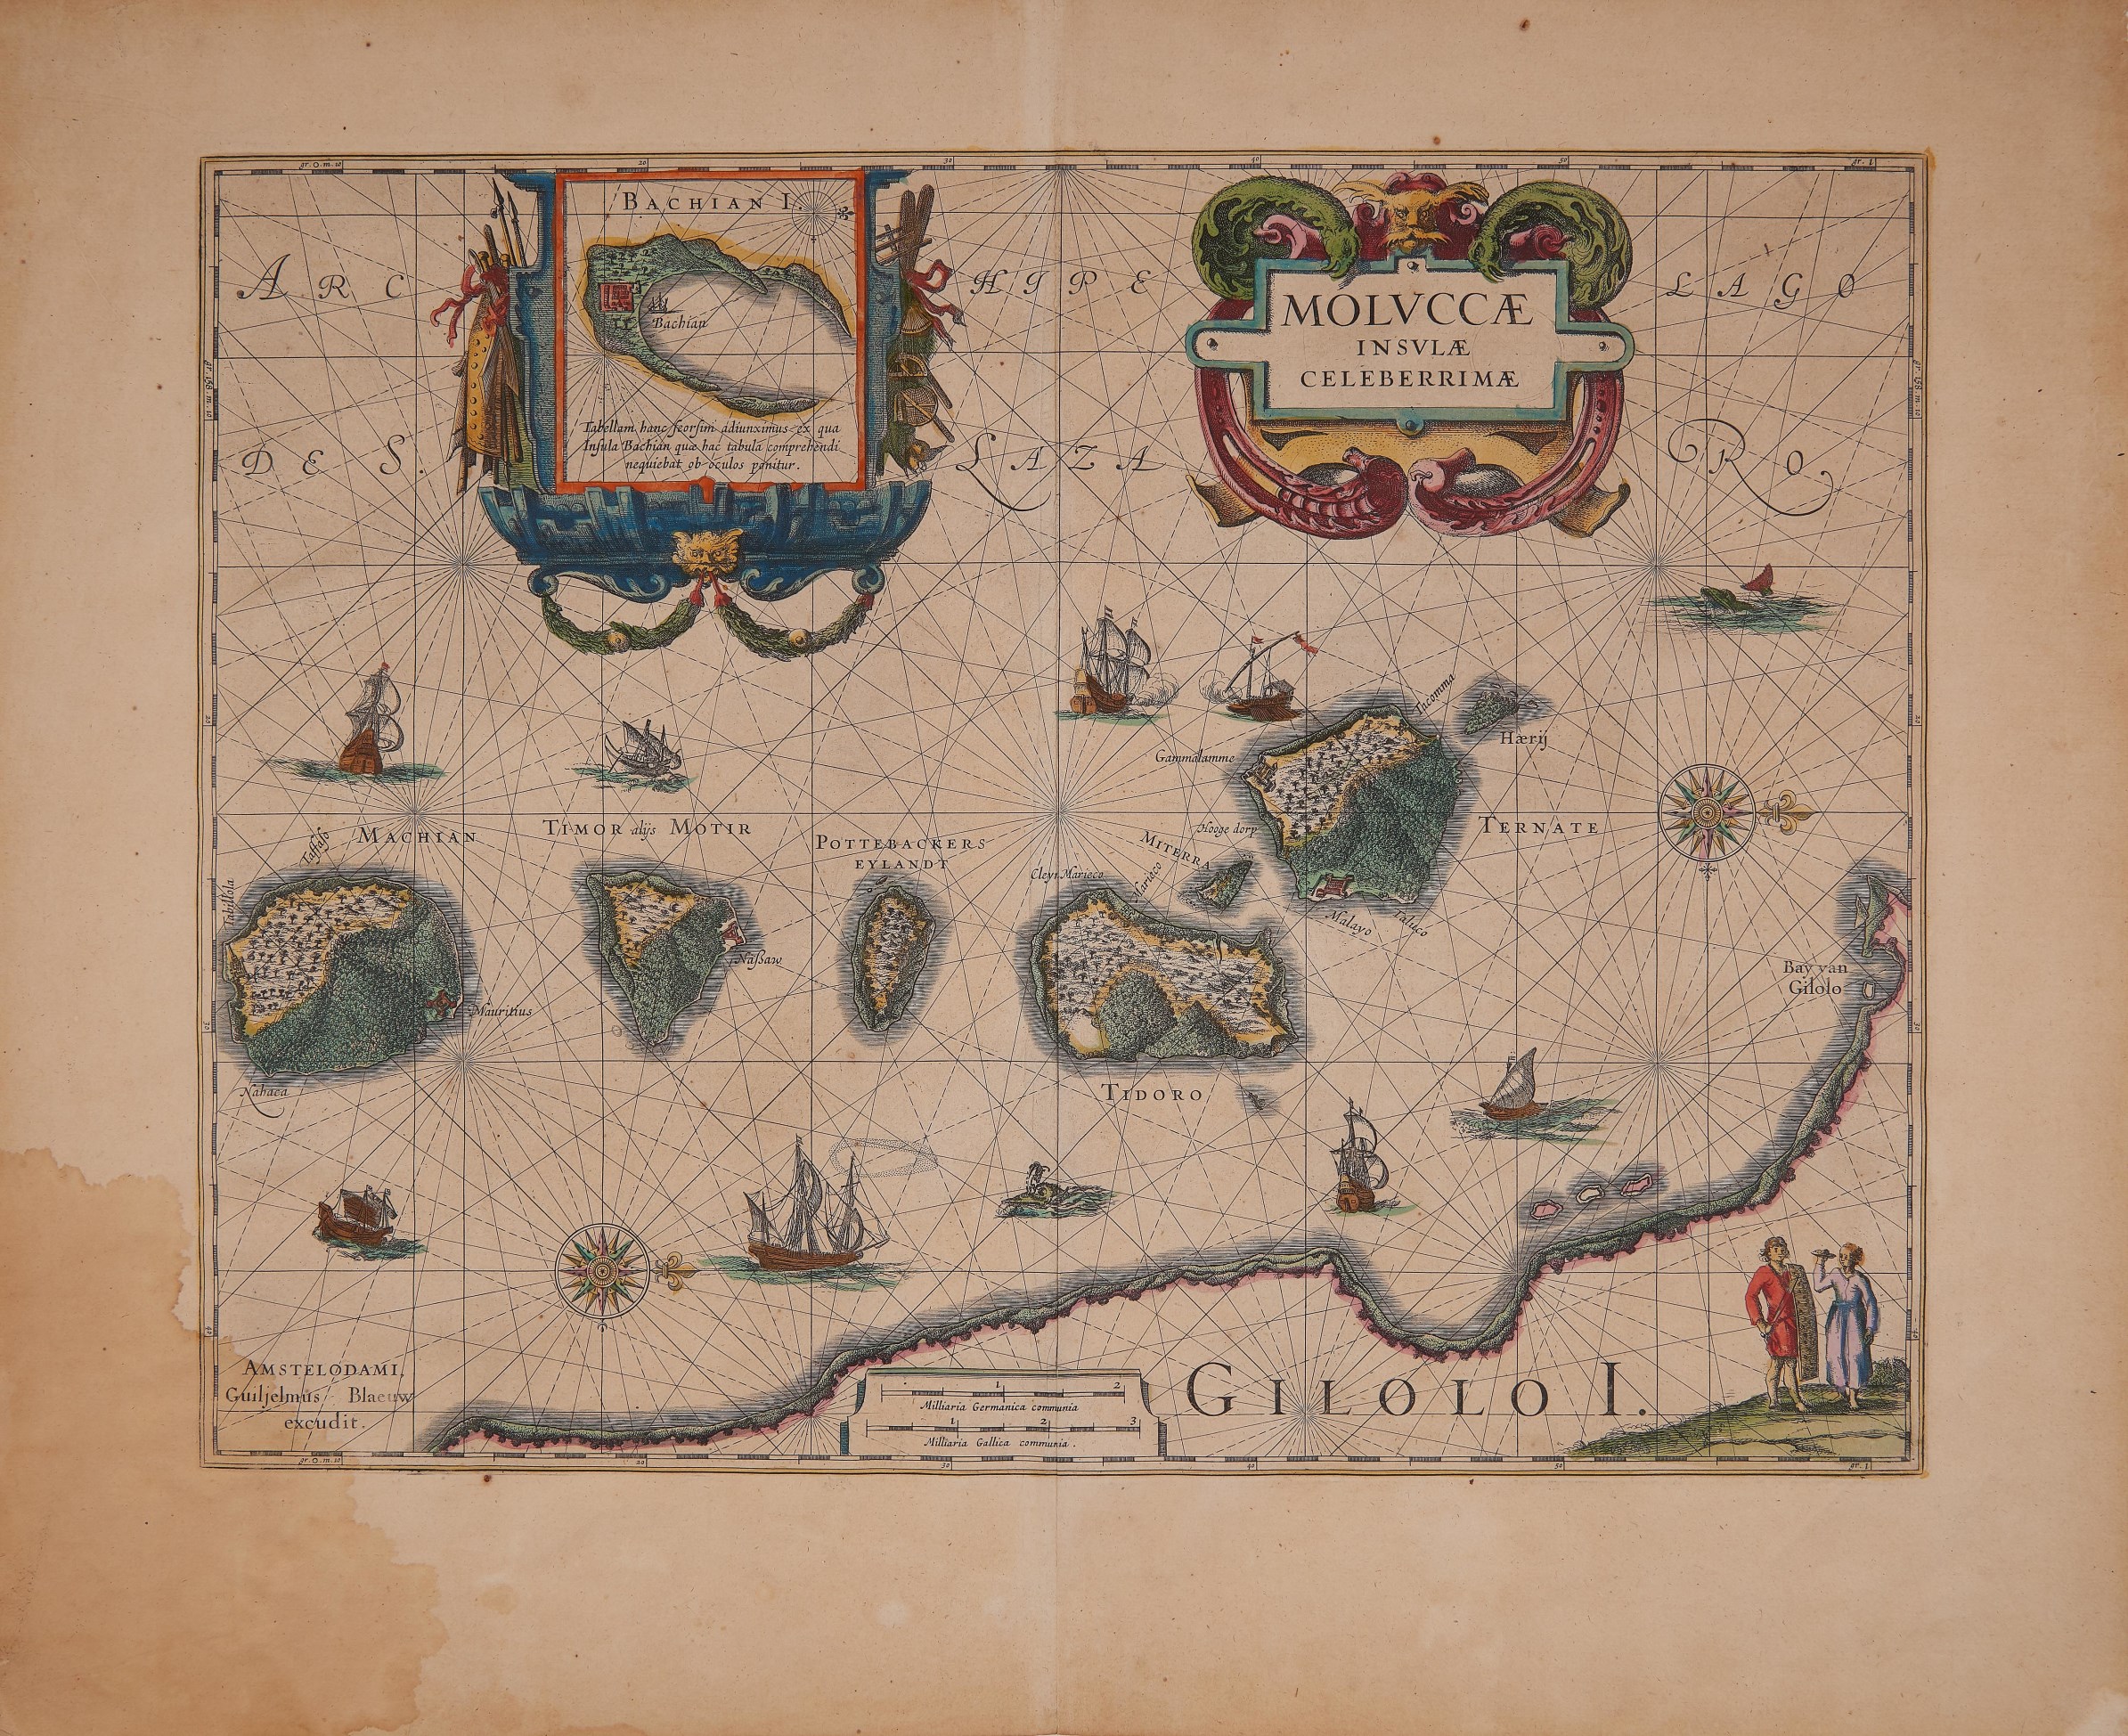 BLAEU, William (1571-1638). Moluccae insulae celeberrimae. Amsterdam: [s.n. 1630]. Bella mappa